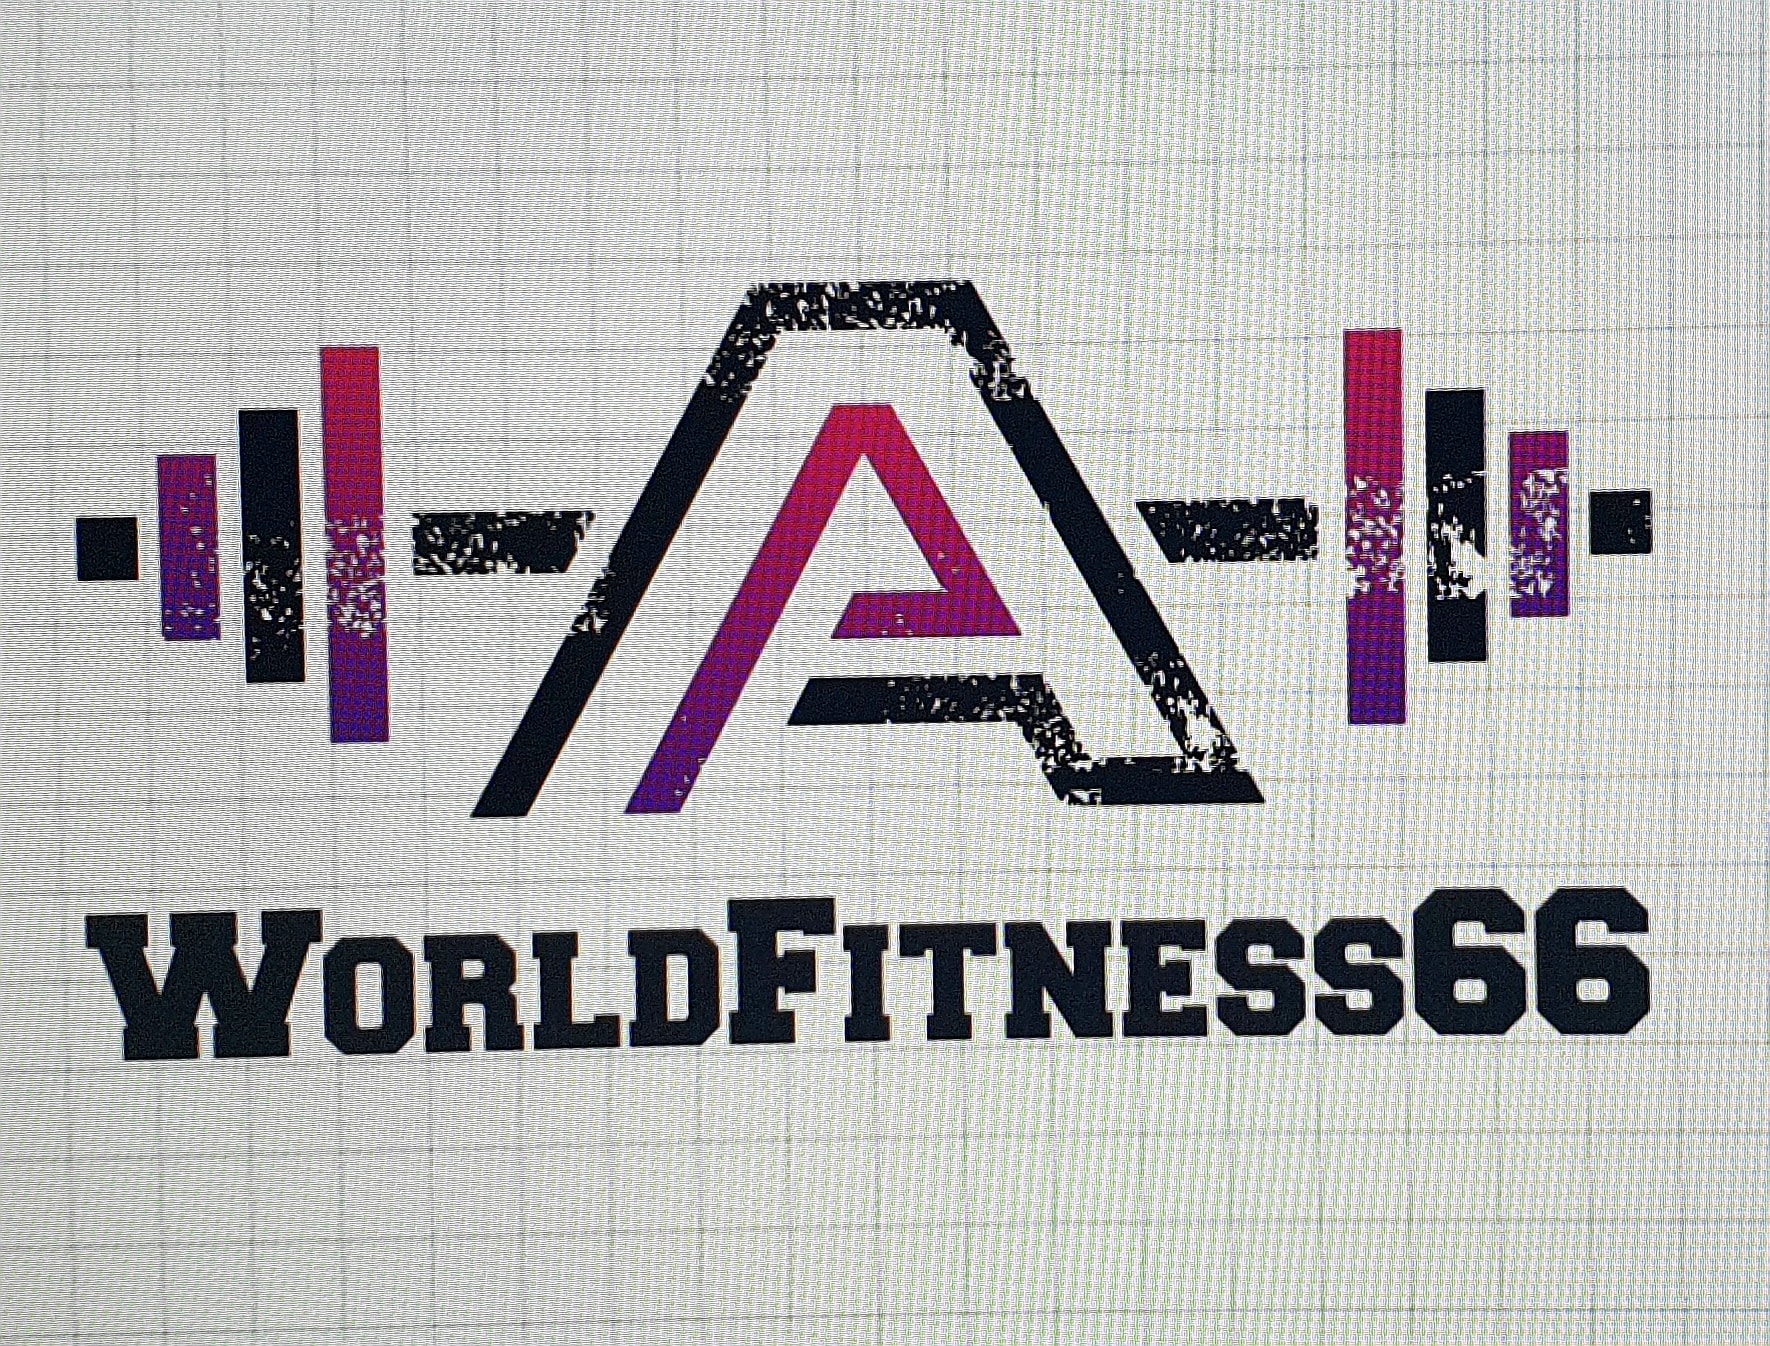 World Fitness 66